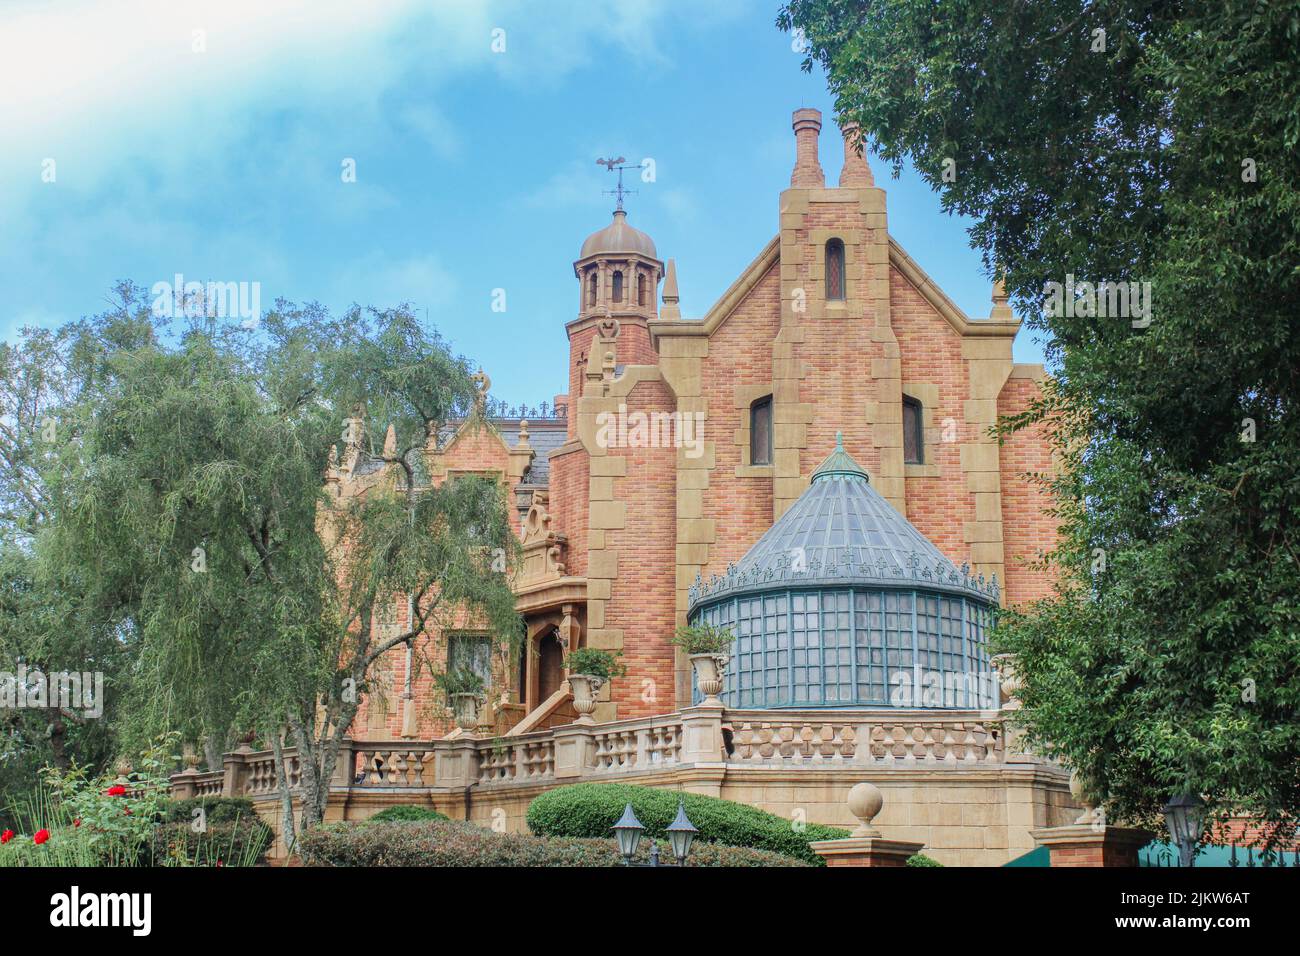 The view of the Haunted Mansion in Magic Kingdom. Walt Disney World, Bay Lake, Florida. Stock Photo